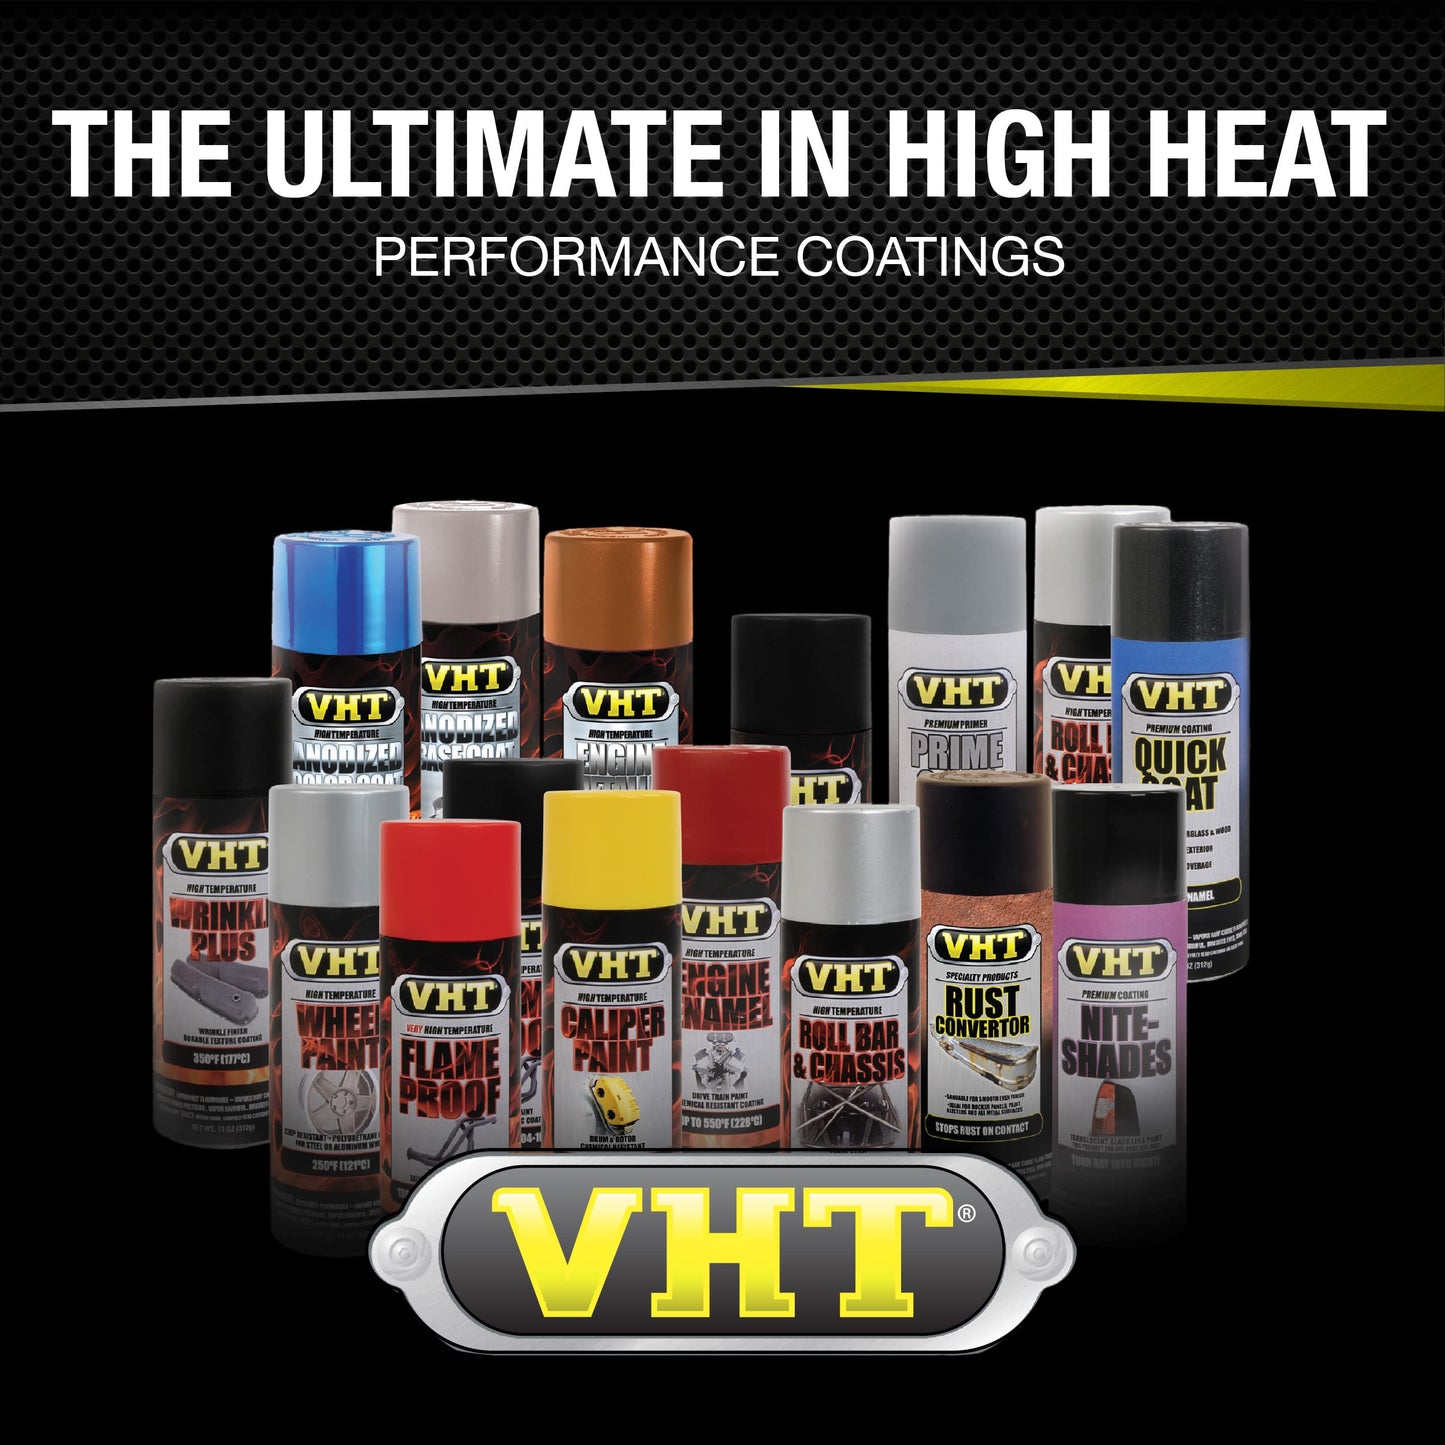 VHT SP229 Rust Convertor Spray Paint – Black – 10.25 oz Aerosol Can